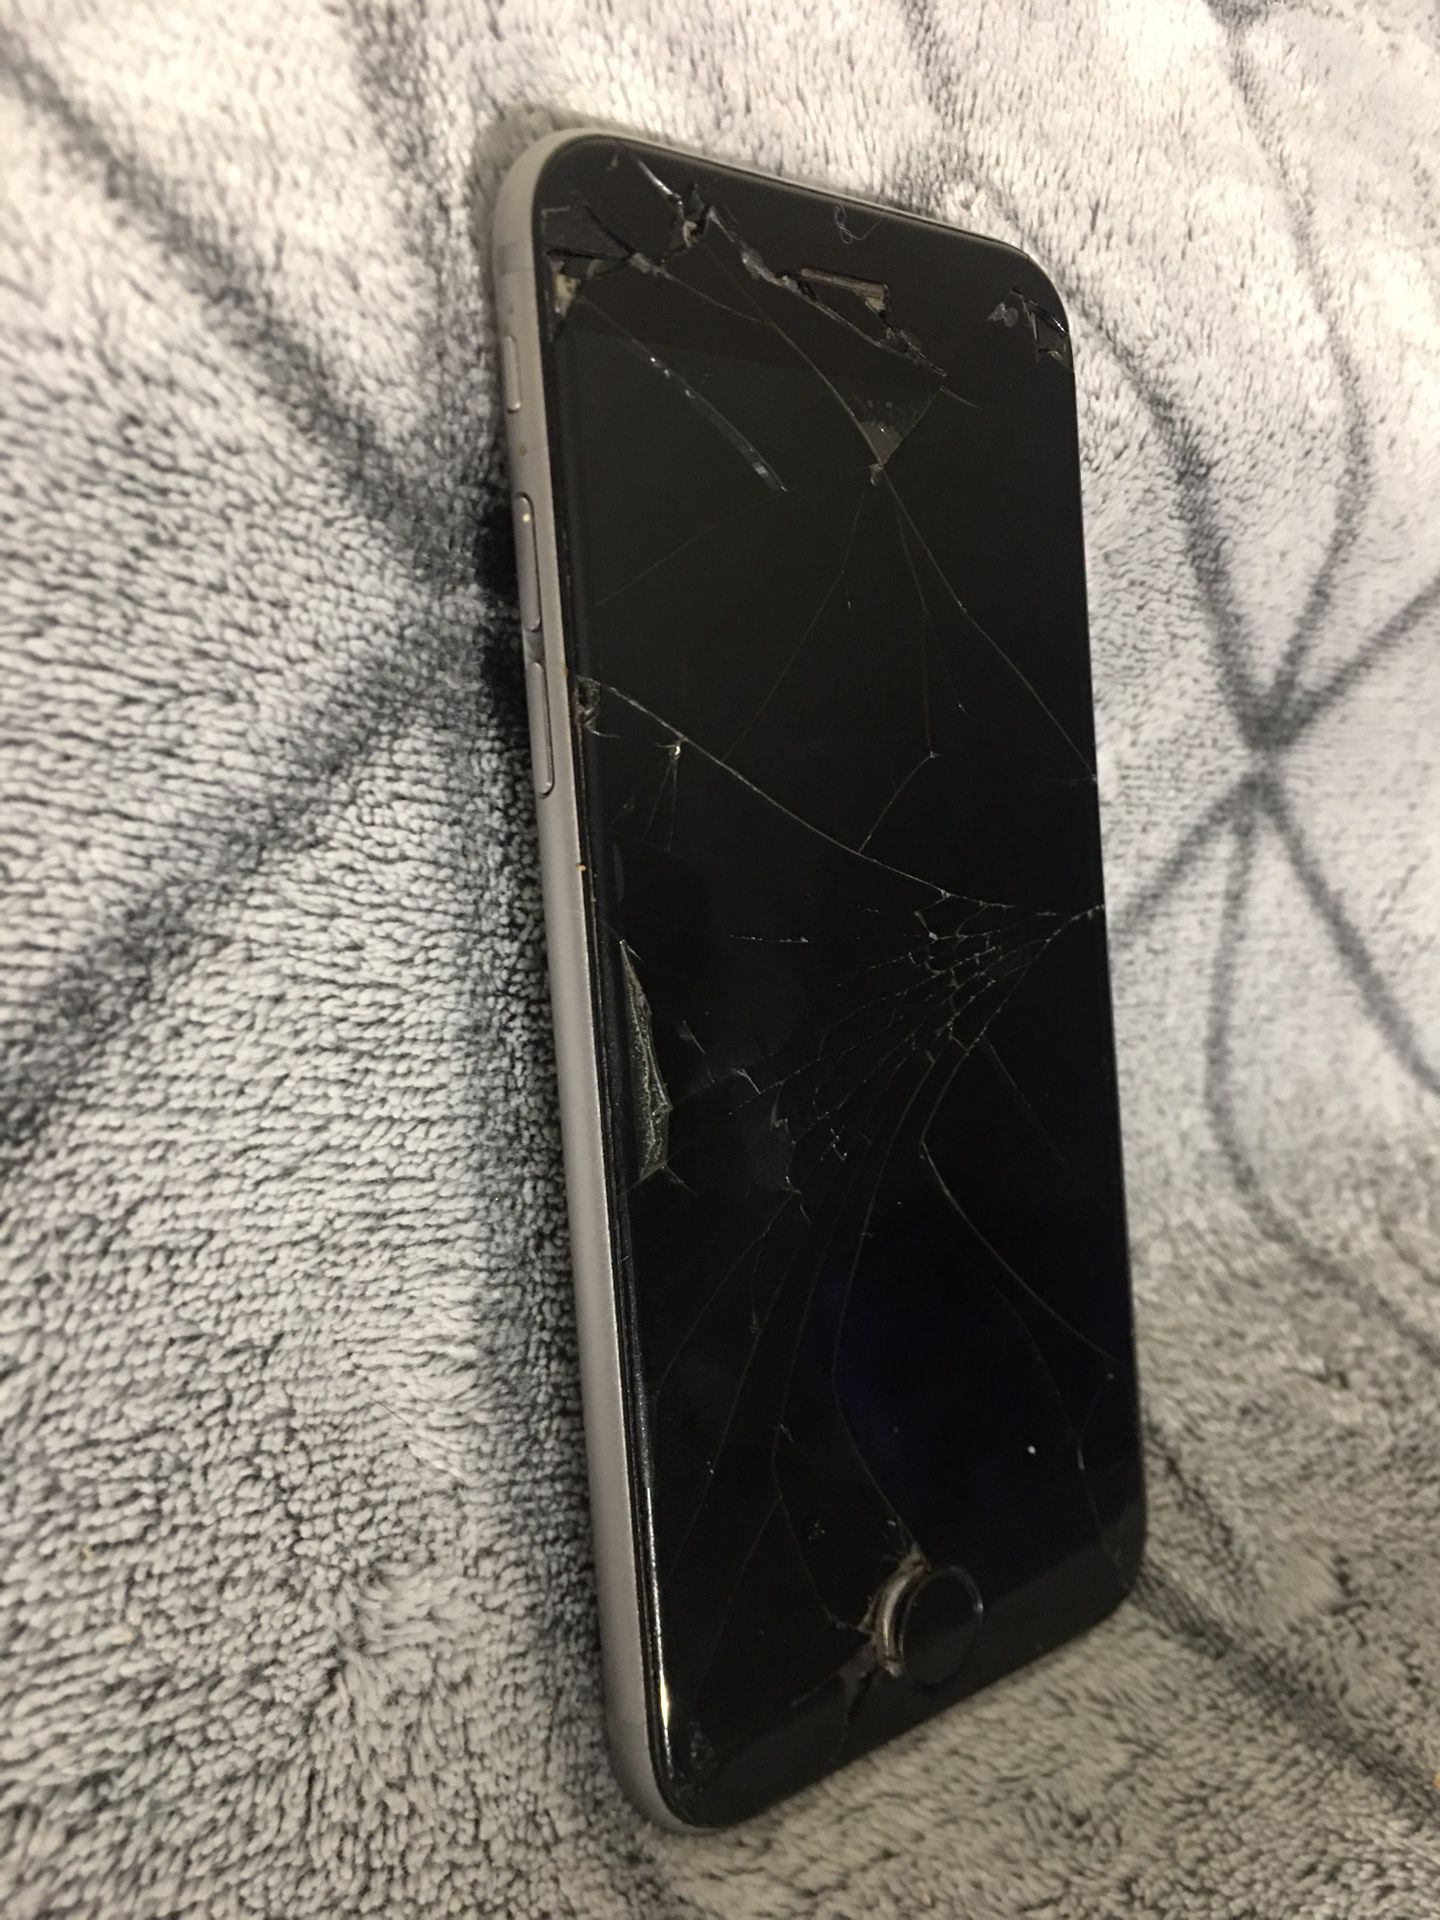 iPhone 6s (UNLOCKED!!) cracked screen